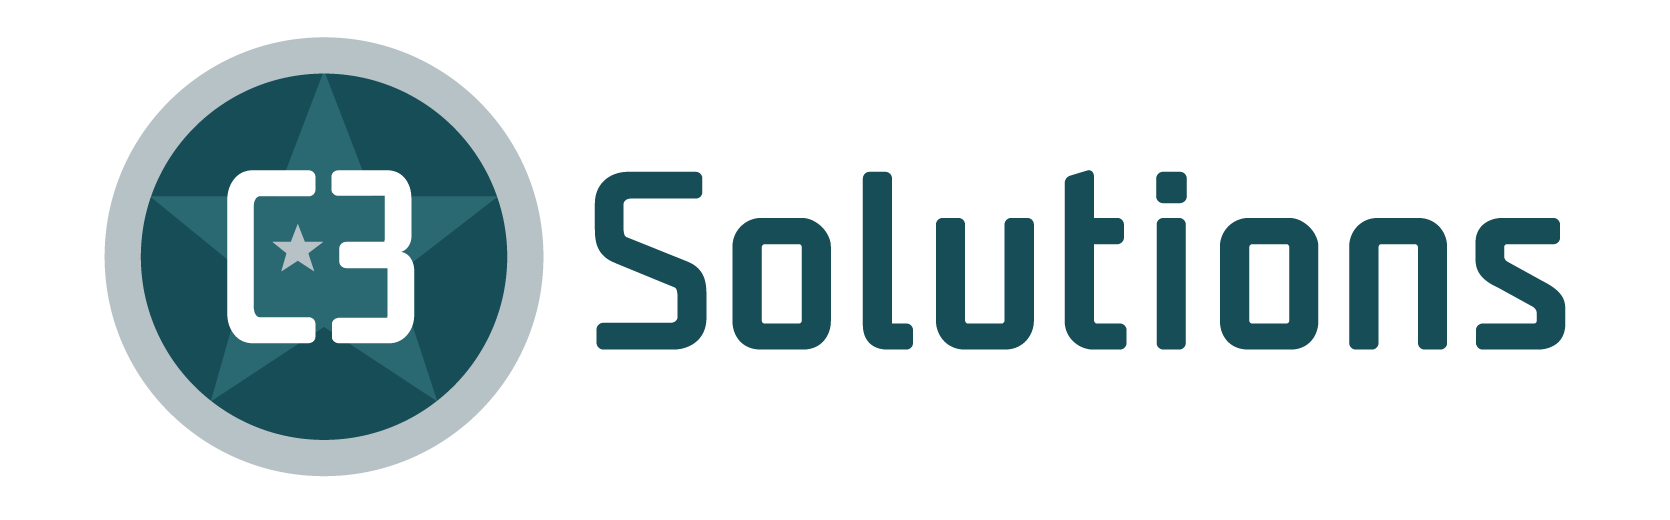 c3solutions-logo-horizontal-light